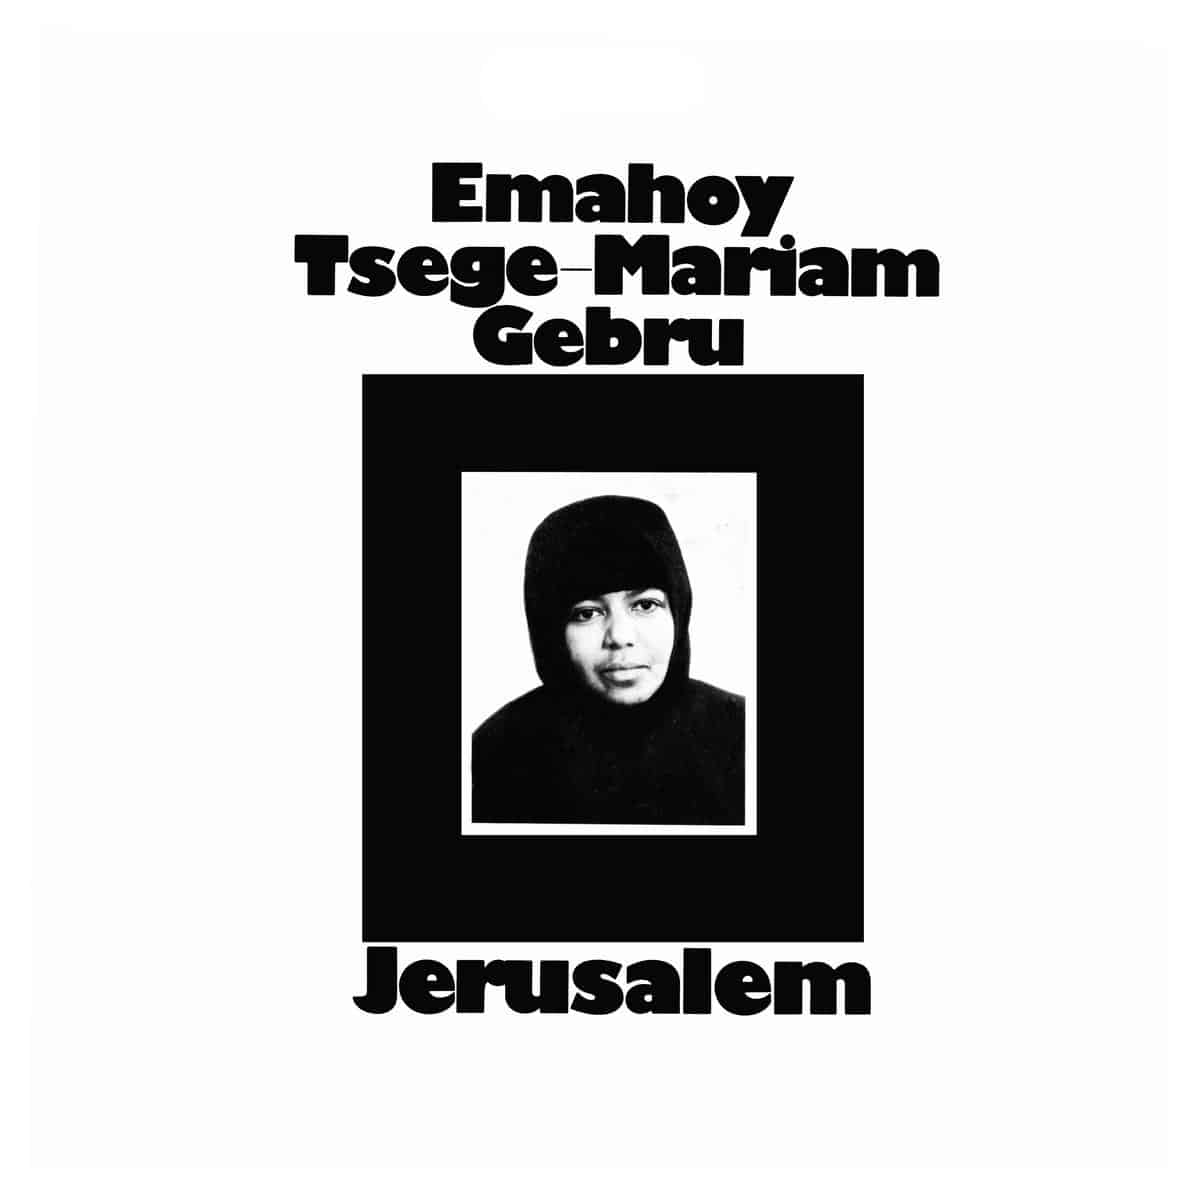 Jerusalem by Emahoy Tsege-Mariam Gebru